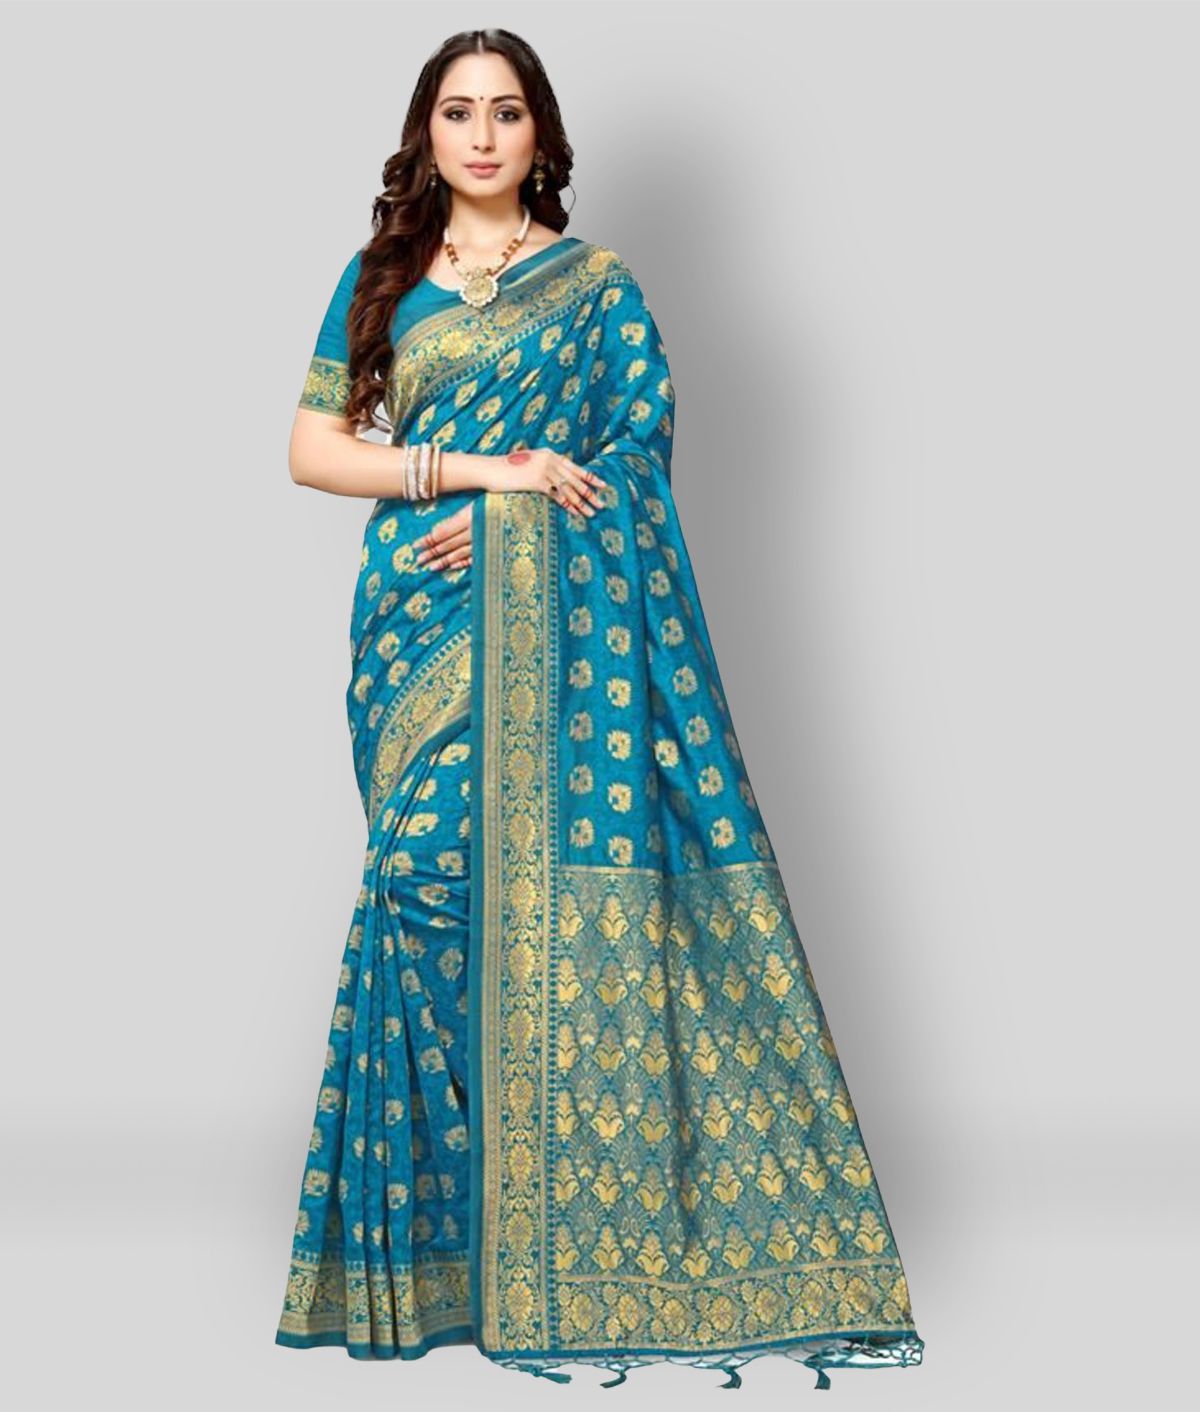     			NENCY FASHION - Light Blue Banarasi Silk Saree With Blouse Piece (Pack of 1)